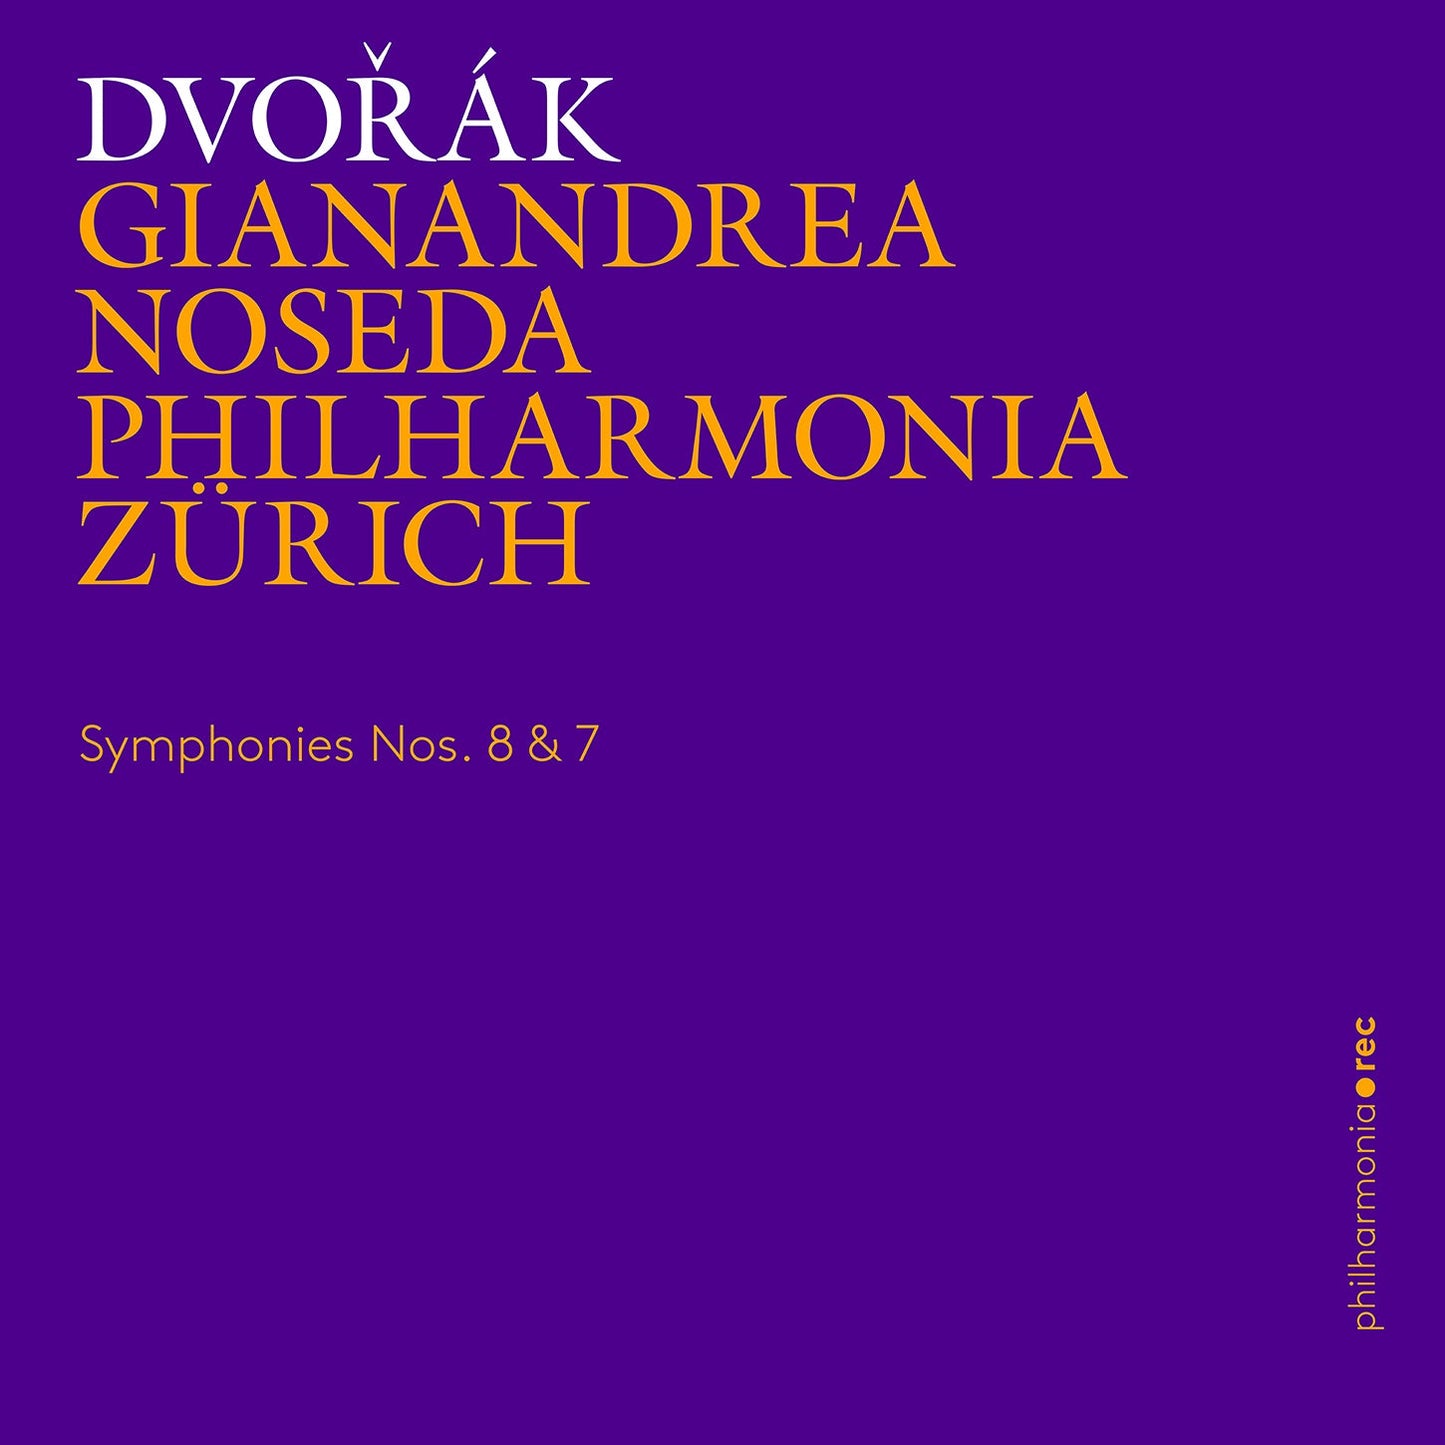 Dvořak: Symphonies Nos. 8 & 7